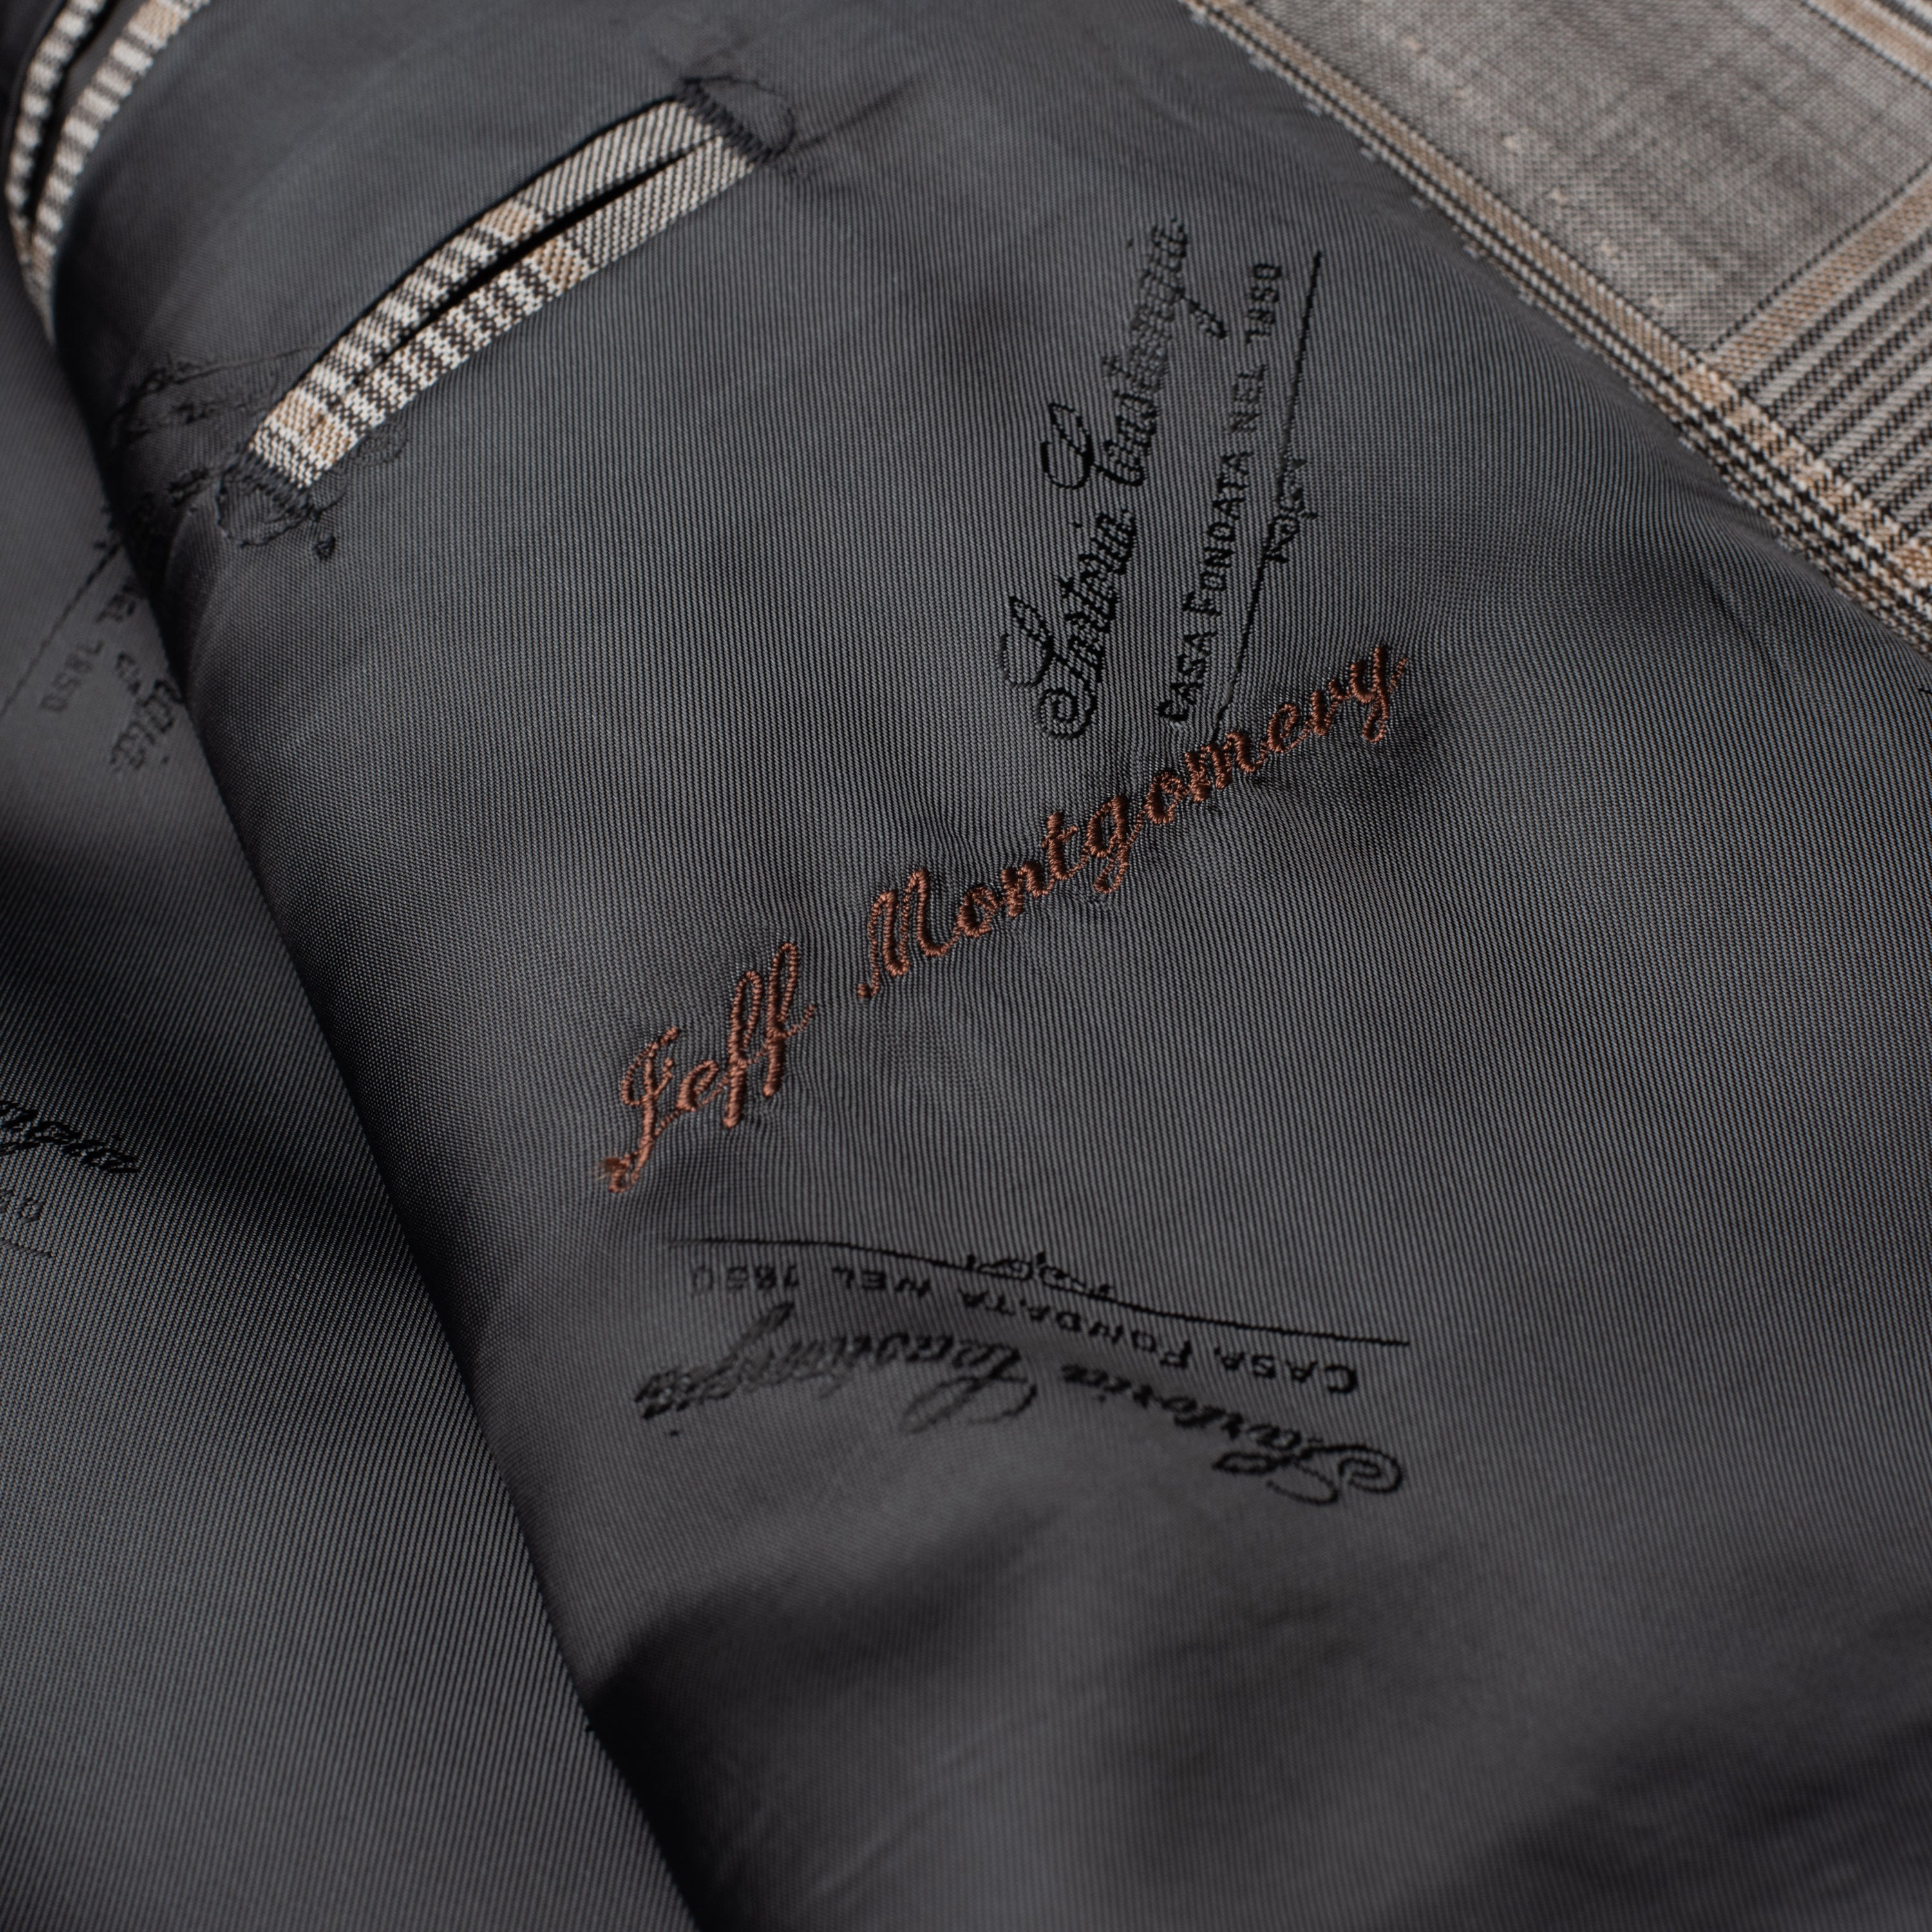 SARTORIA CASTANGIA Platinum Collection 130's Jacket 54 NEW US 42 Made for Celeb